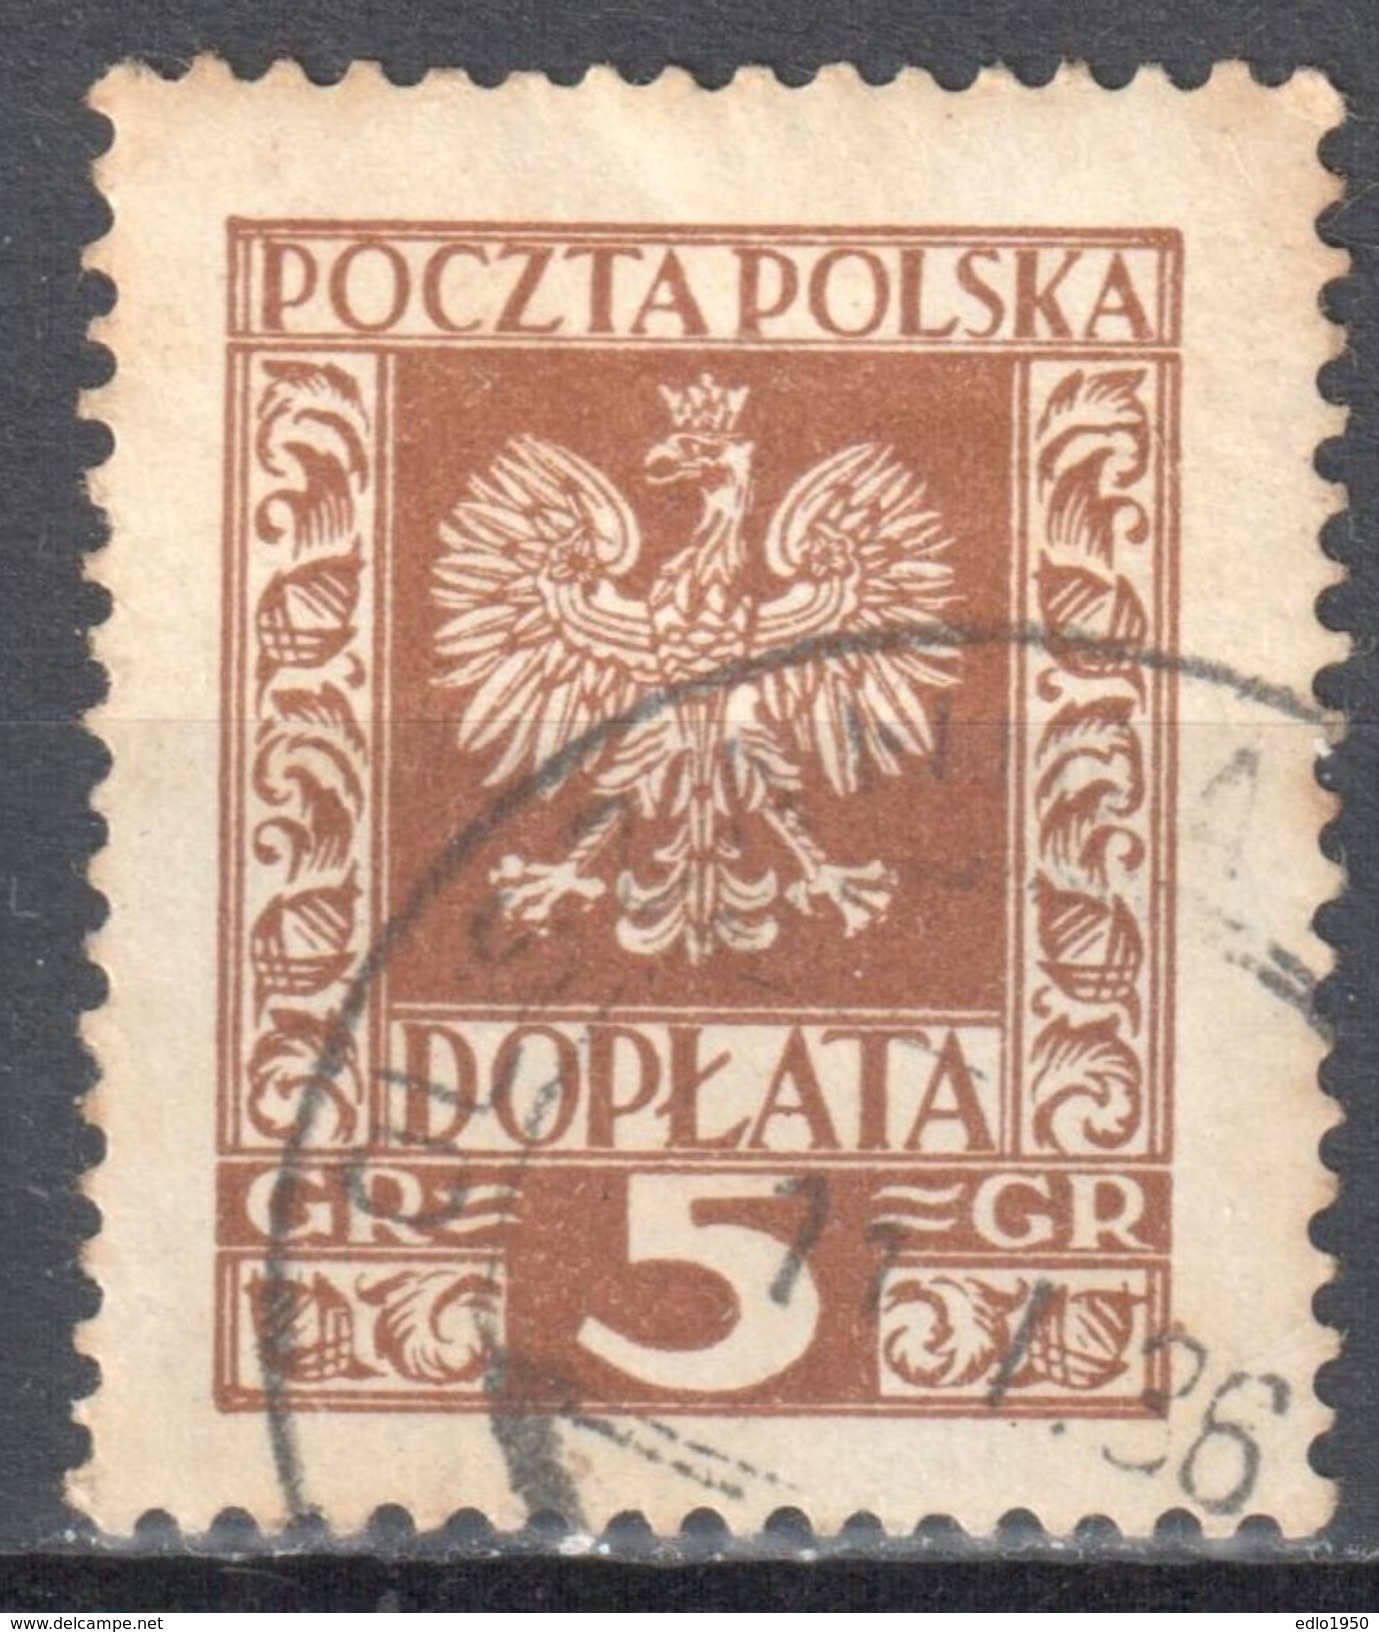 Poland 1930 - Postage Due - Mi.80  - Used - Postage Due